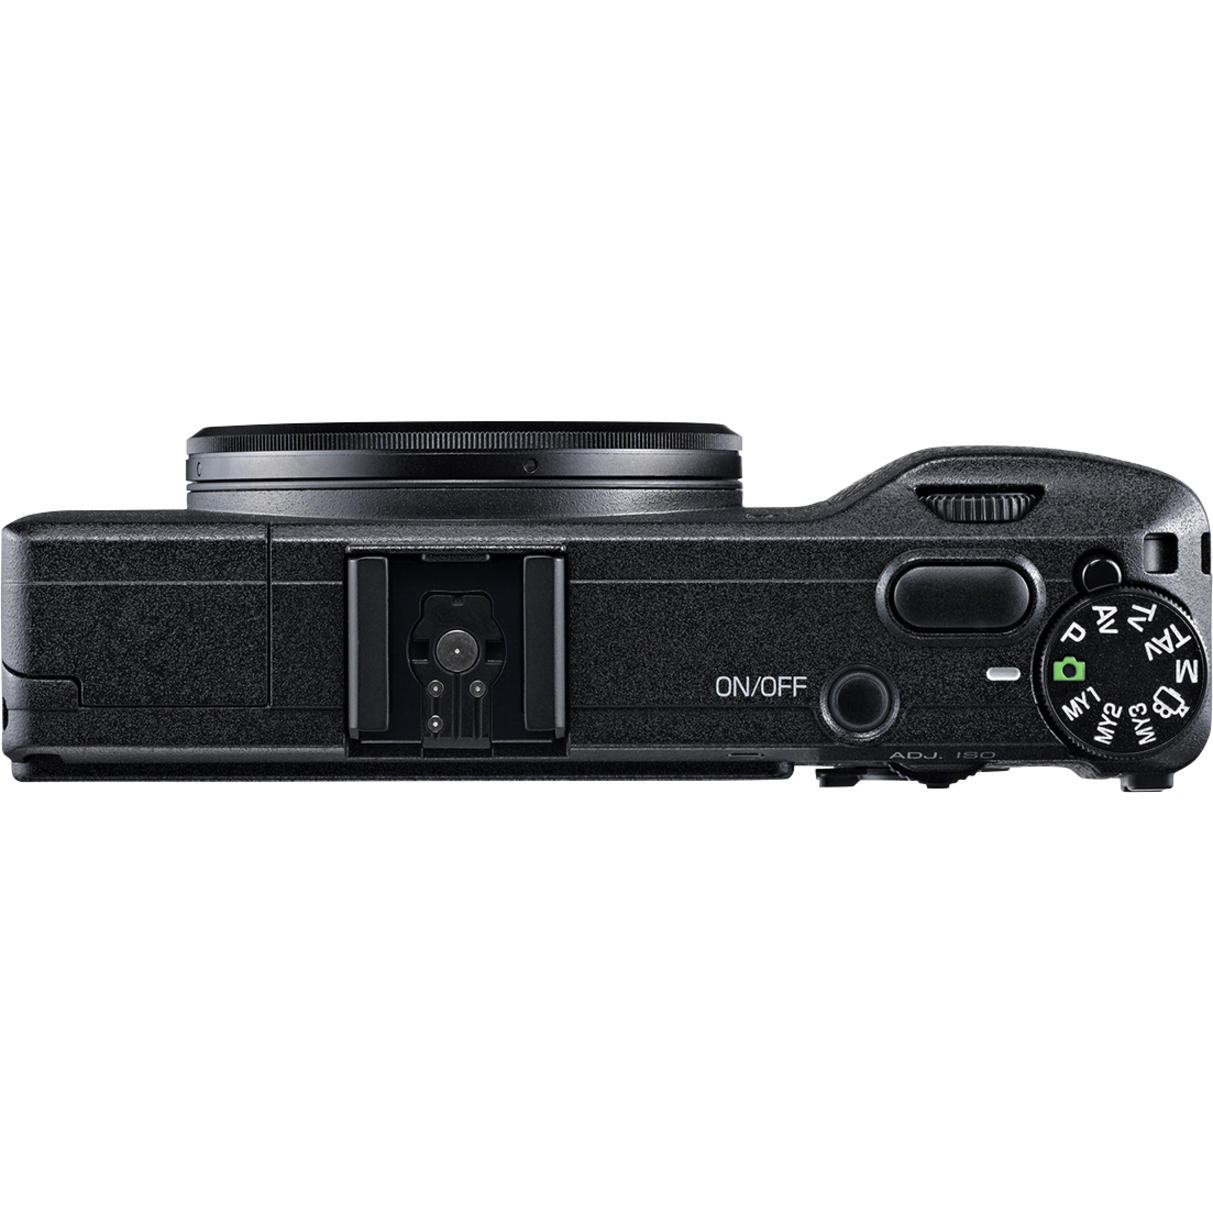 Ricoh GR 16.2 Megapixel Compact Camera, Black - image 4 of 6